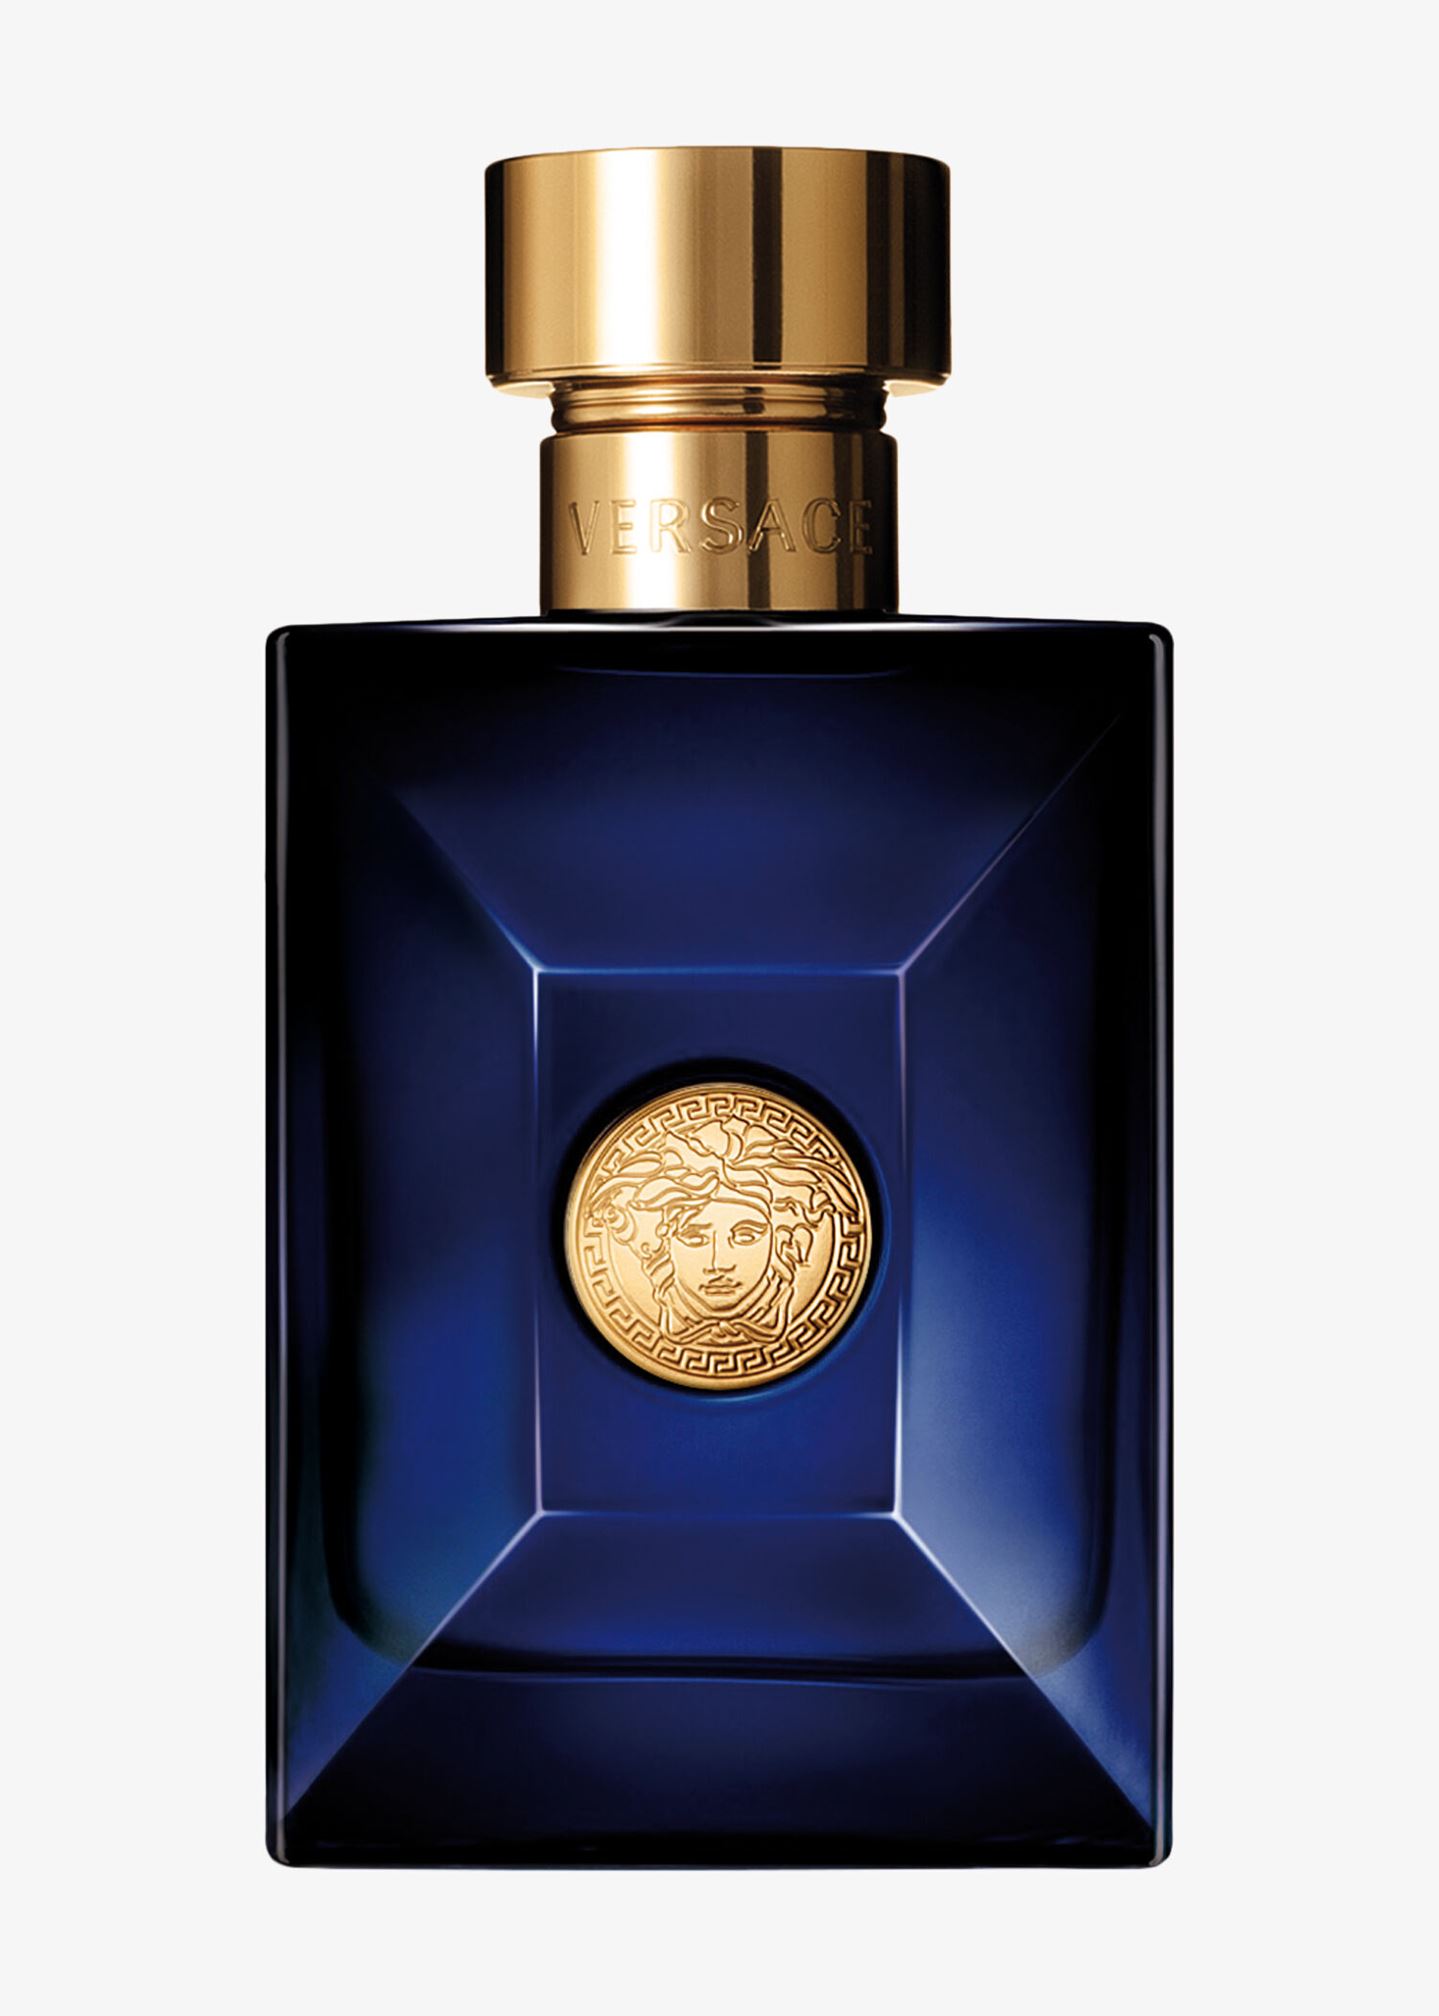 Parfum «Dylan Blue»